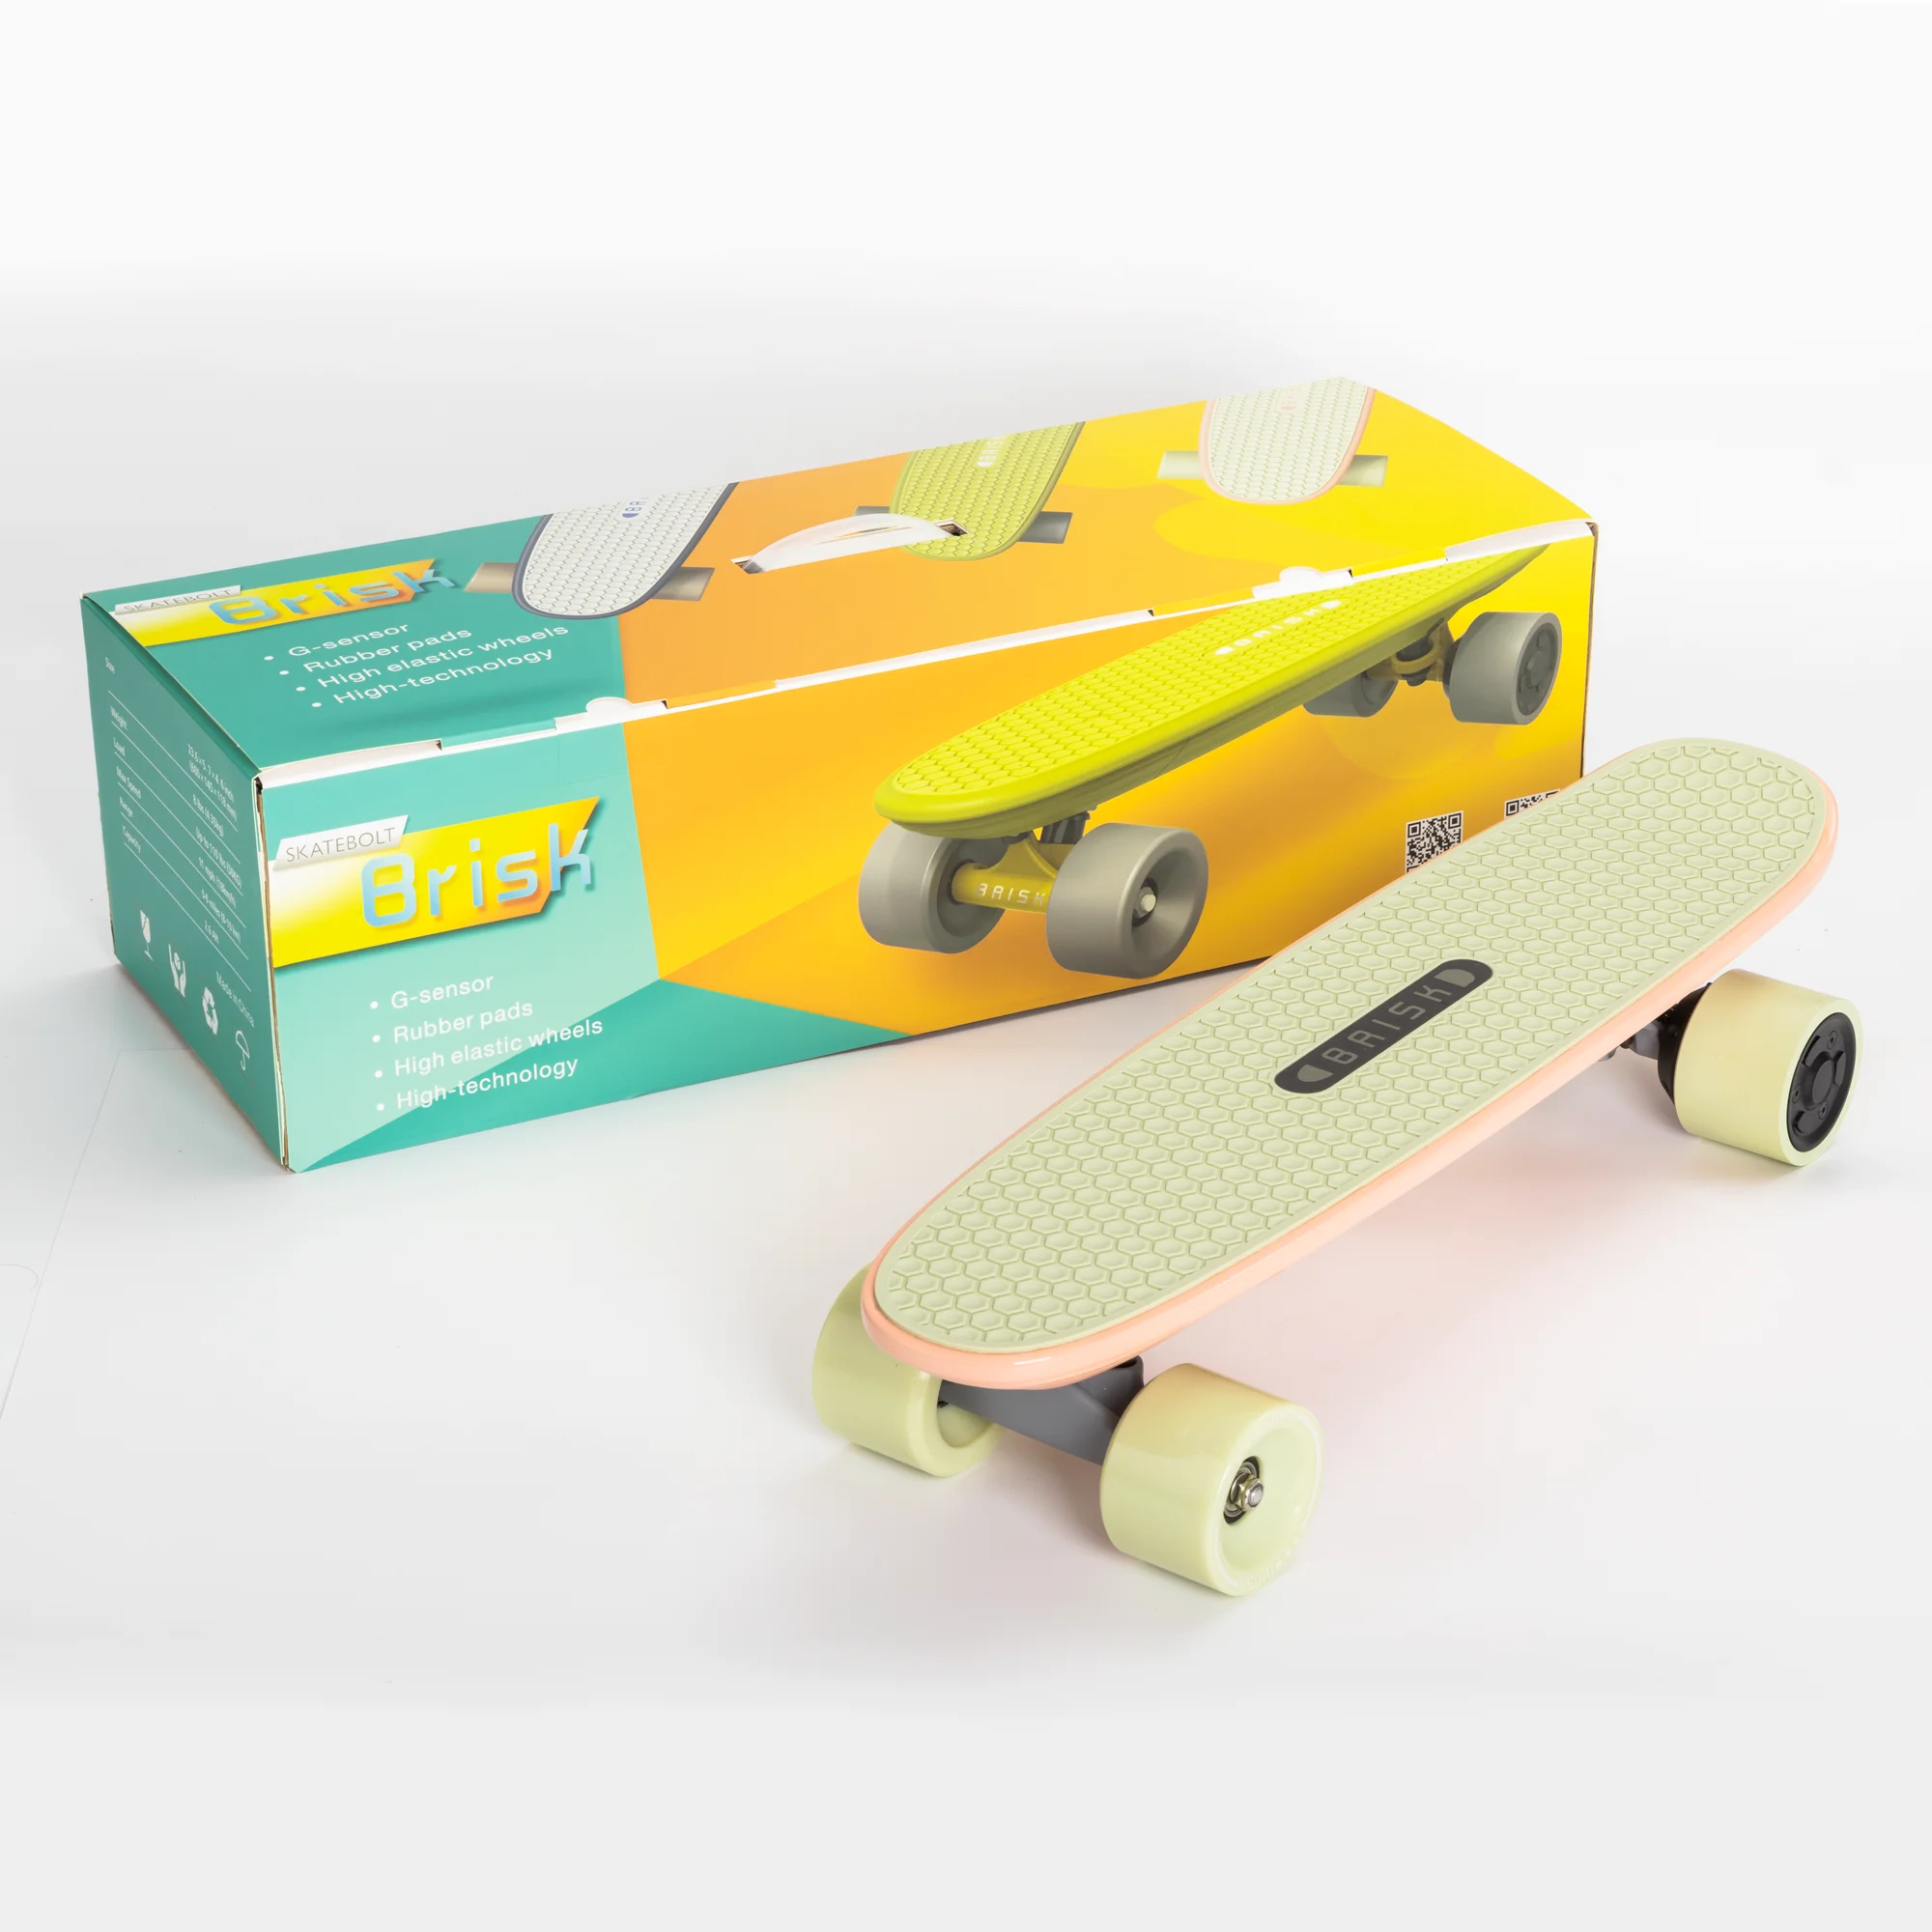 

Most Popular Skatebolt Brisk cheap Mini dual hub motor self-banlanced hover board Electric Skateboard